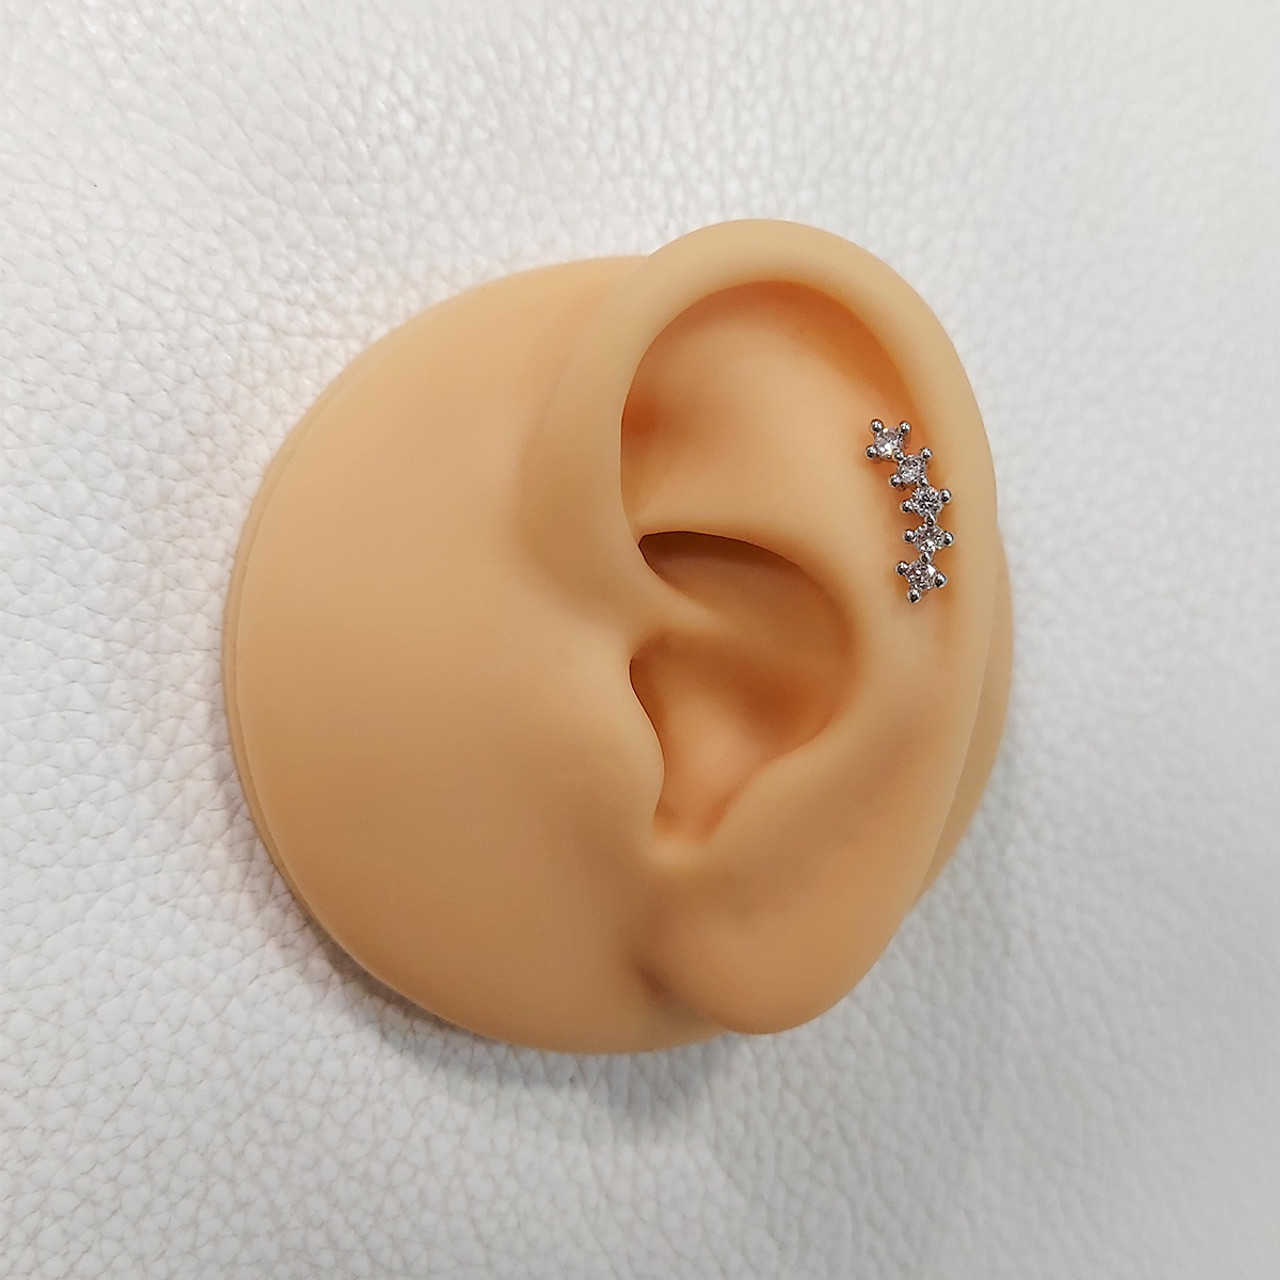 Triple Helix Flat Back Stud Earrings 2-5m Prong Set 16G 1/4 Tragus Jewelry  Ring